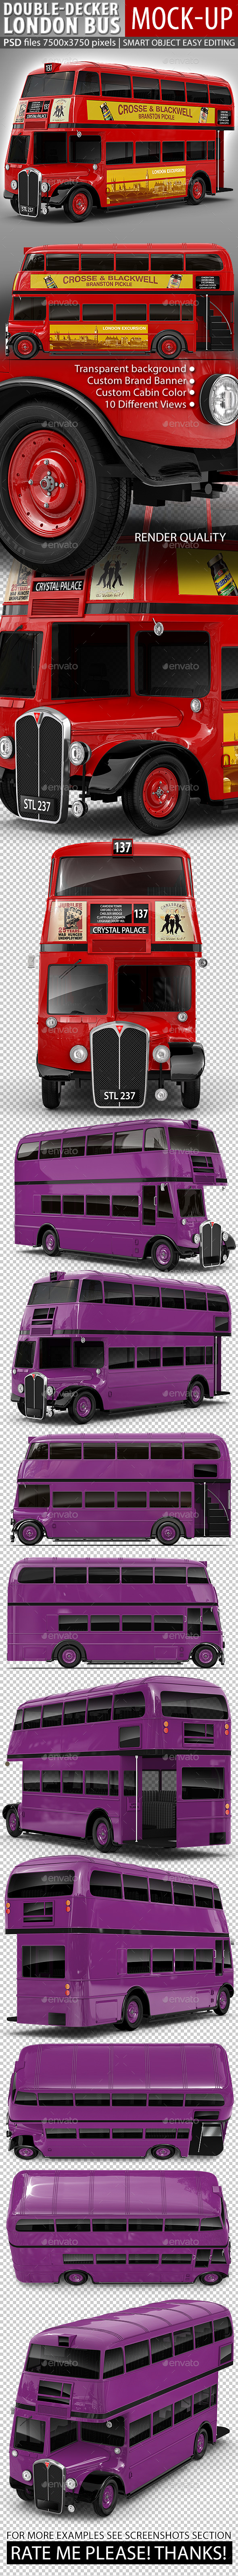 London Double-Decker Bus, Red Coach Mock-up